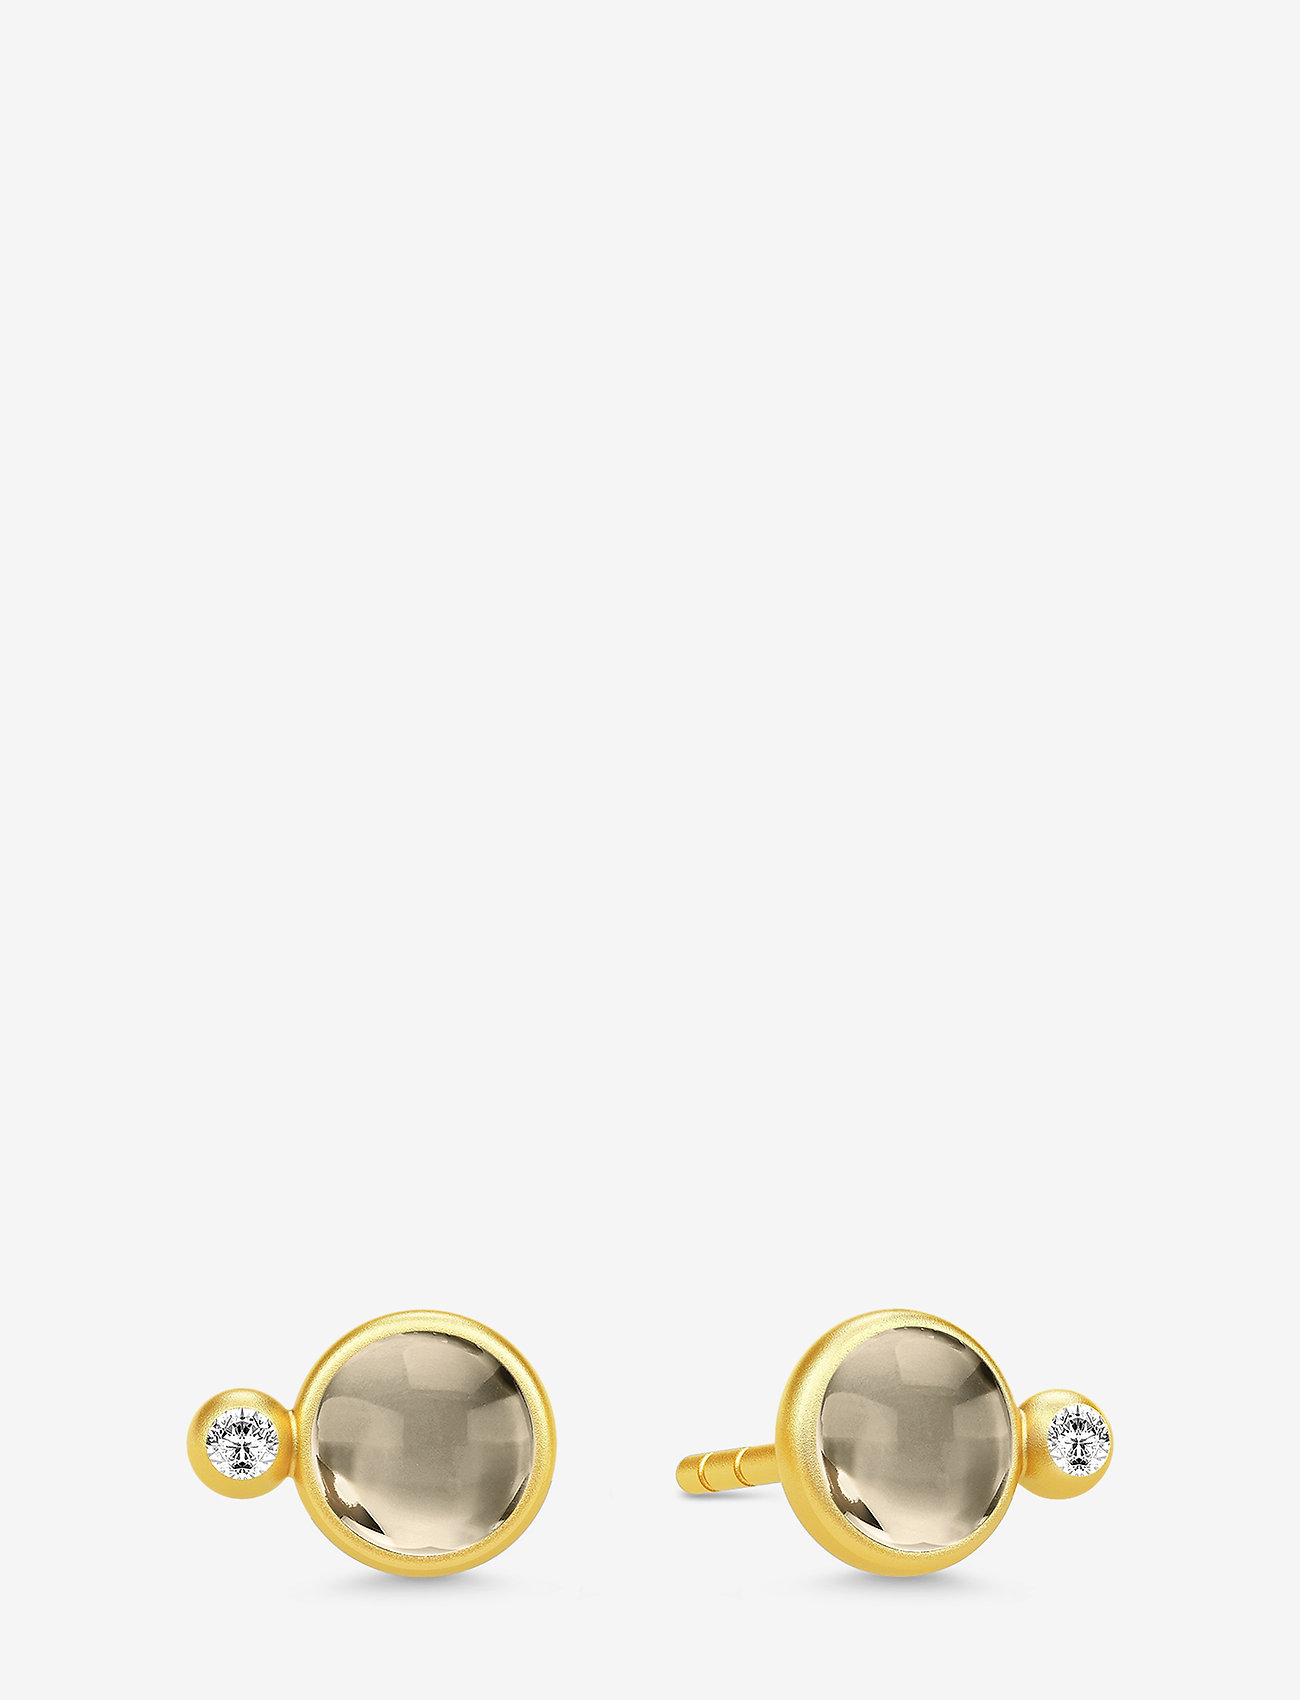 Sommerhus Europa Se venligst Julie Sandlau Prime Earstuds - Gold/smoke - Stud earrings | Boozt.com